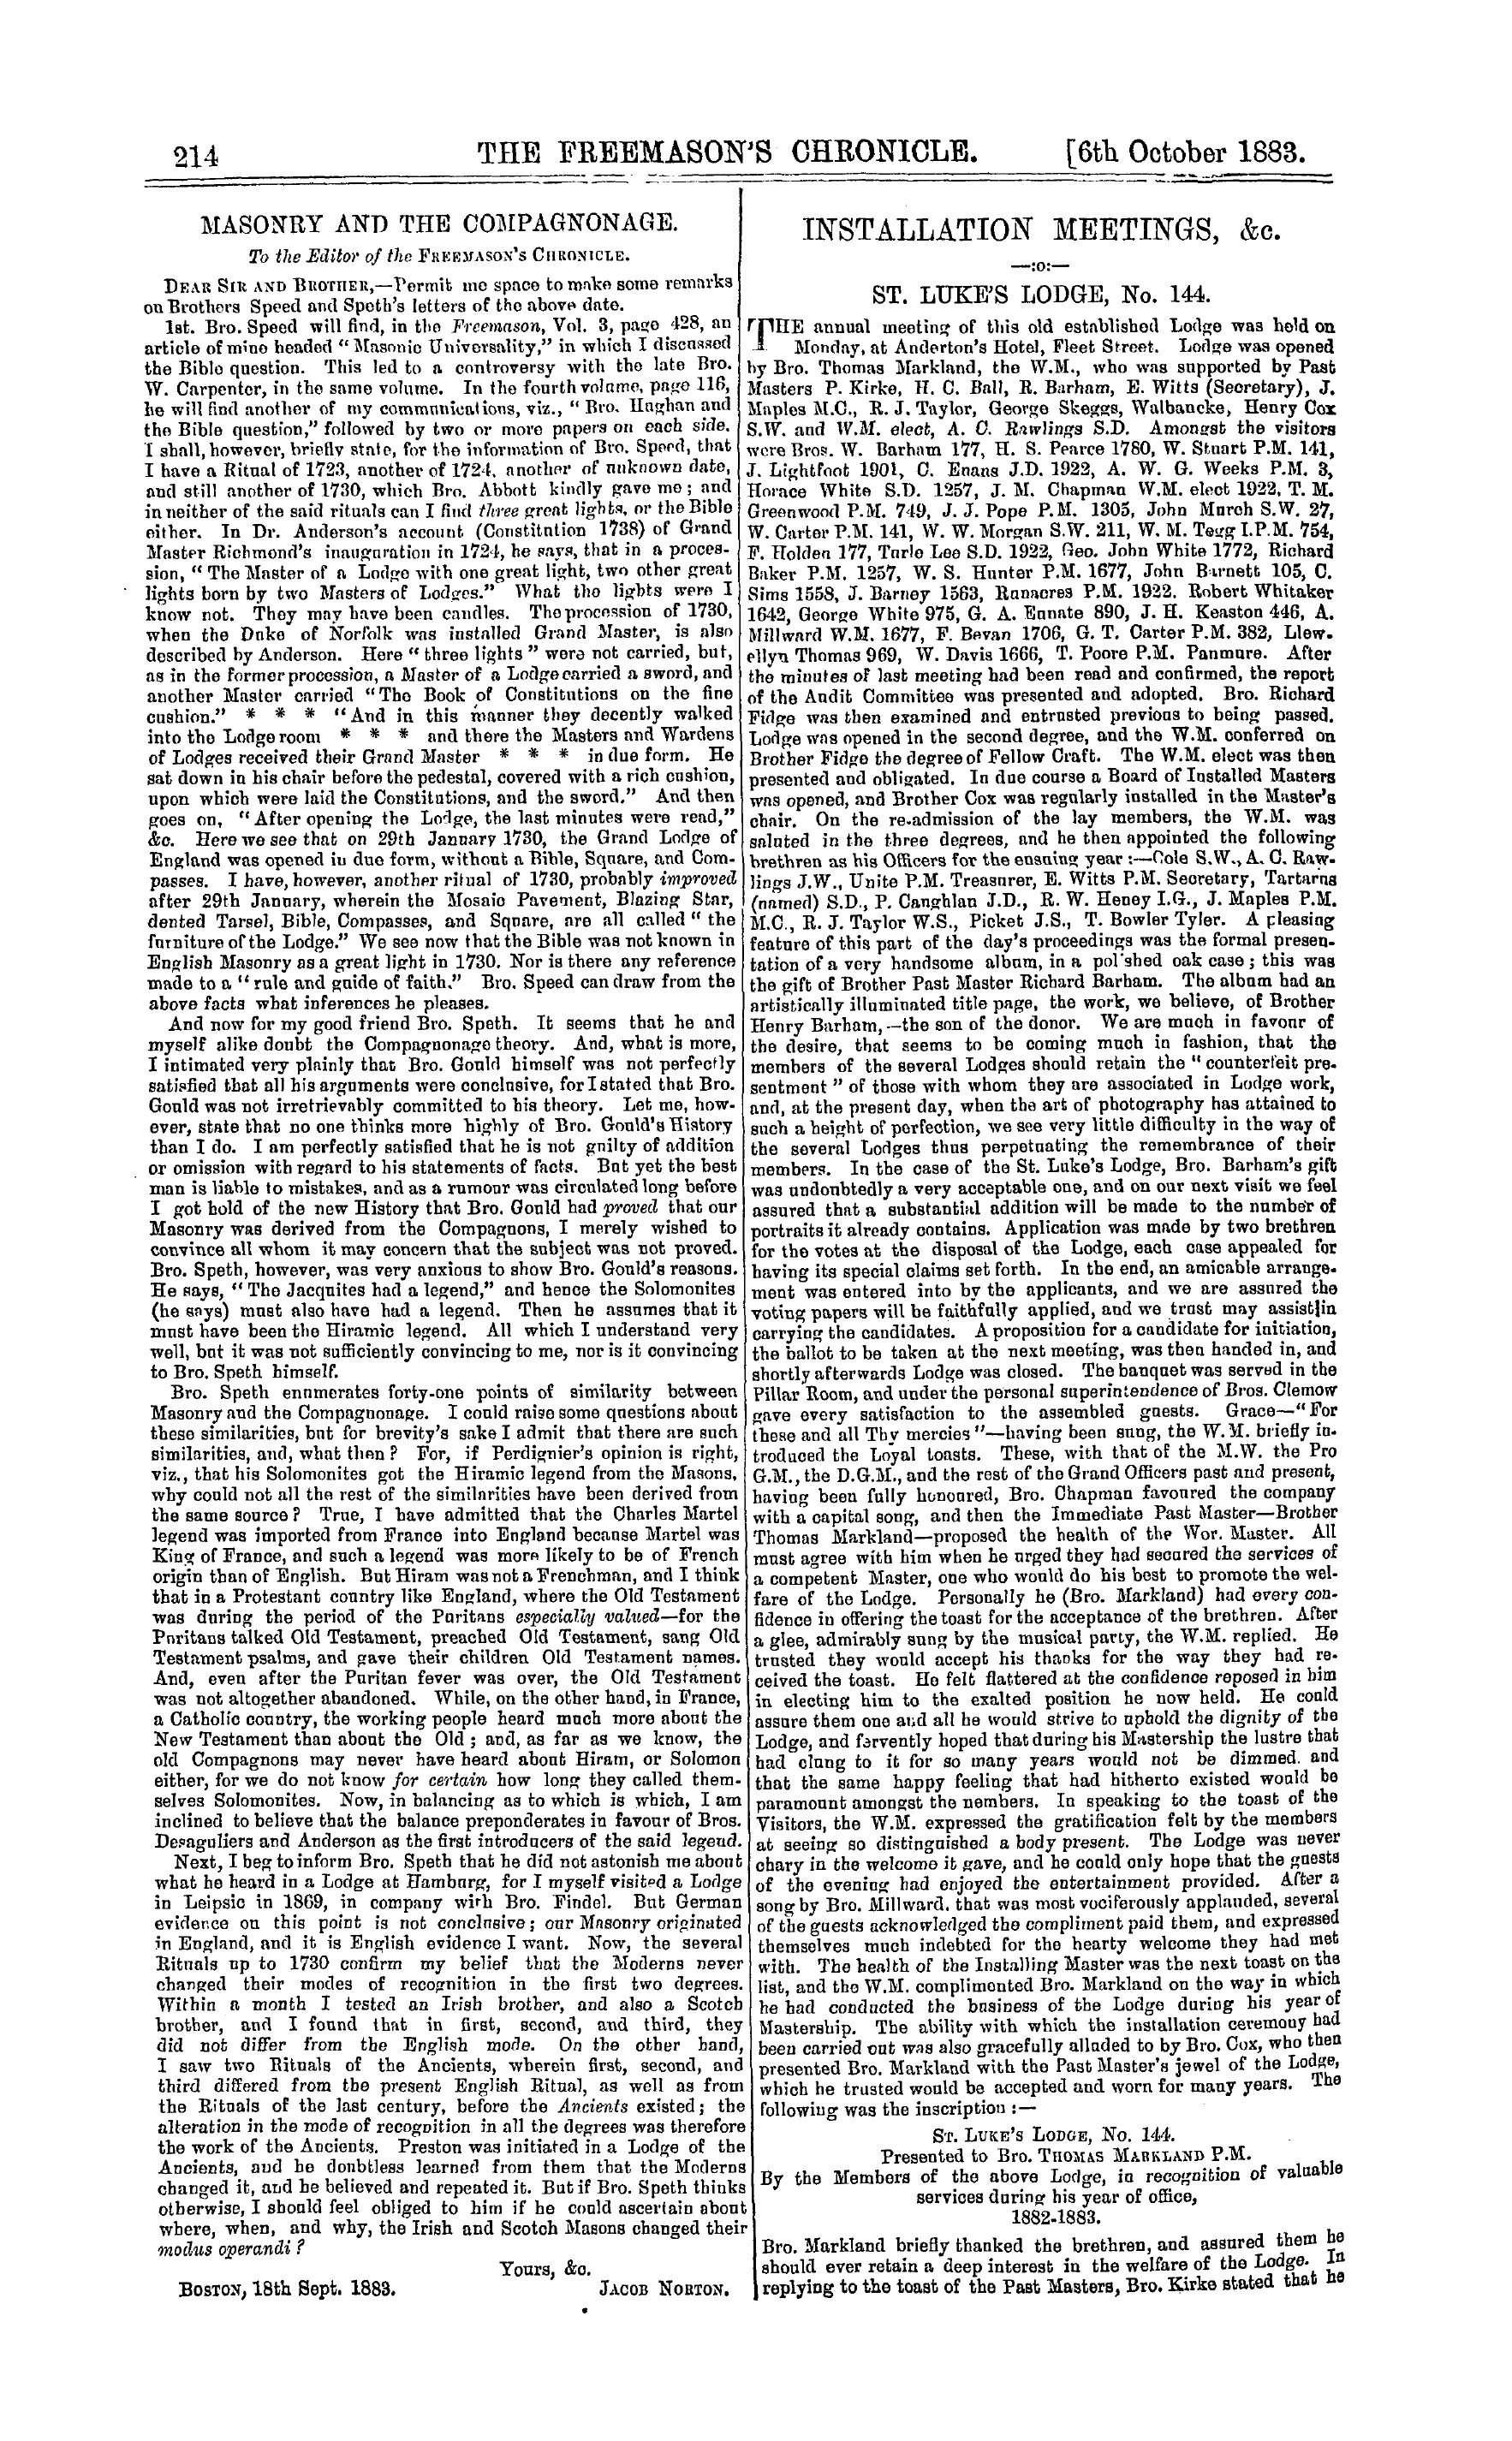 The Freemason's Chronicle: 1883-10-06: 6